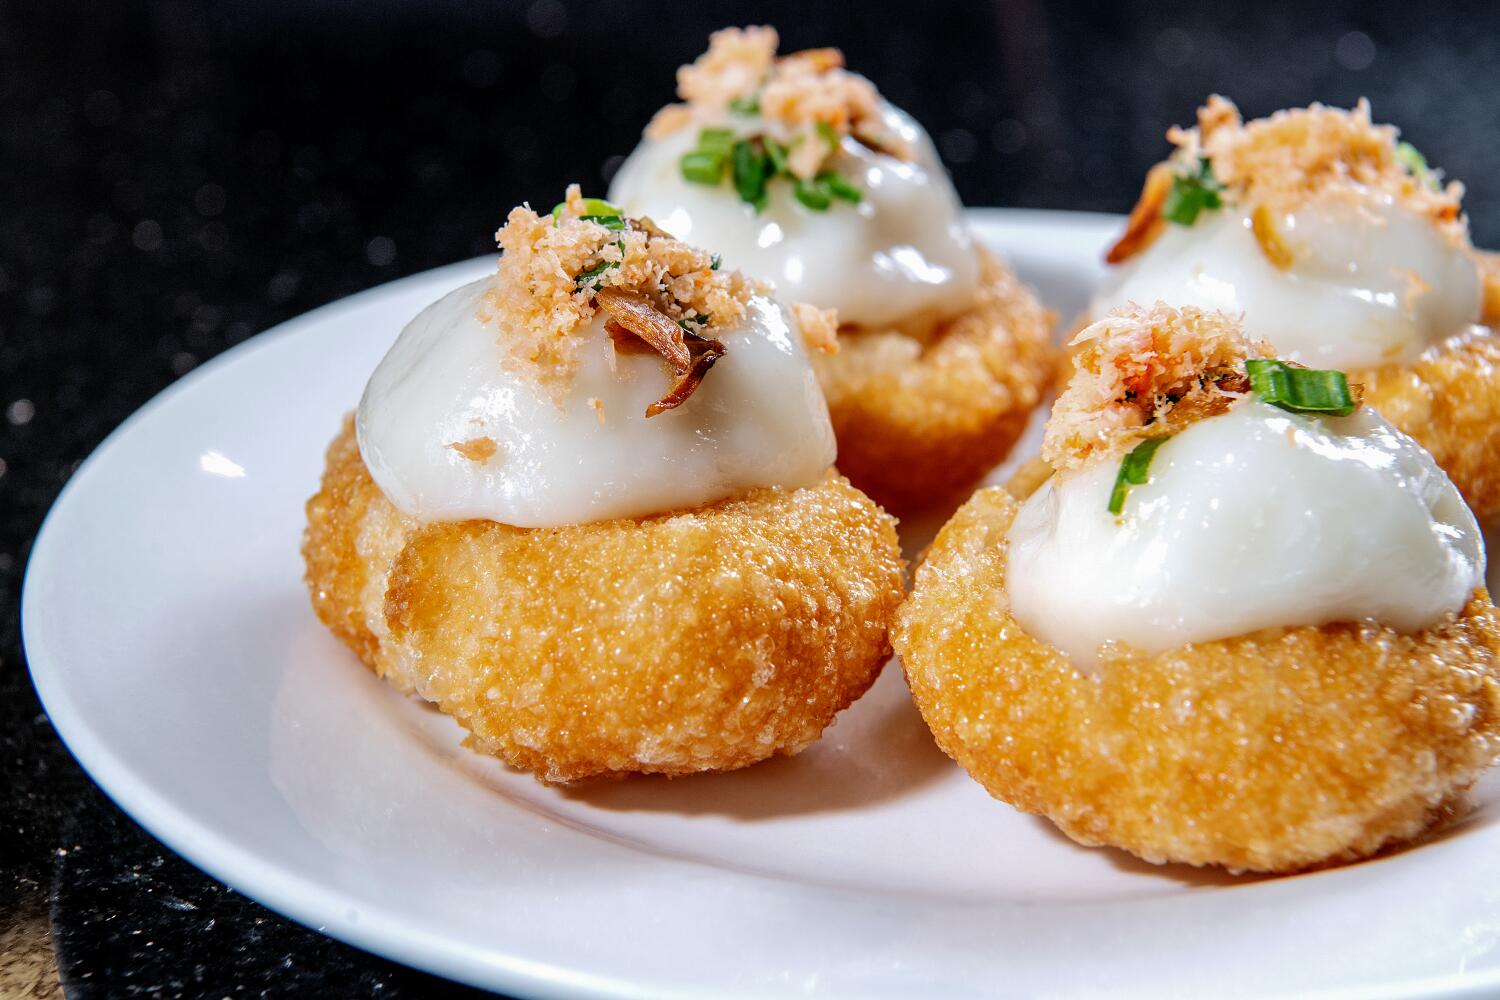 Flying saucer doughnut dumplings do exist. Use the 101 Best Restaurants to find them